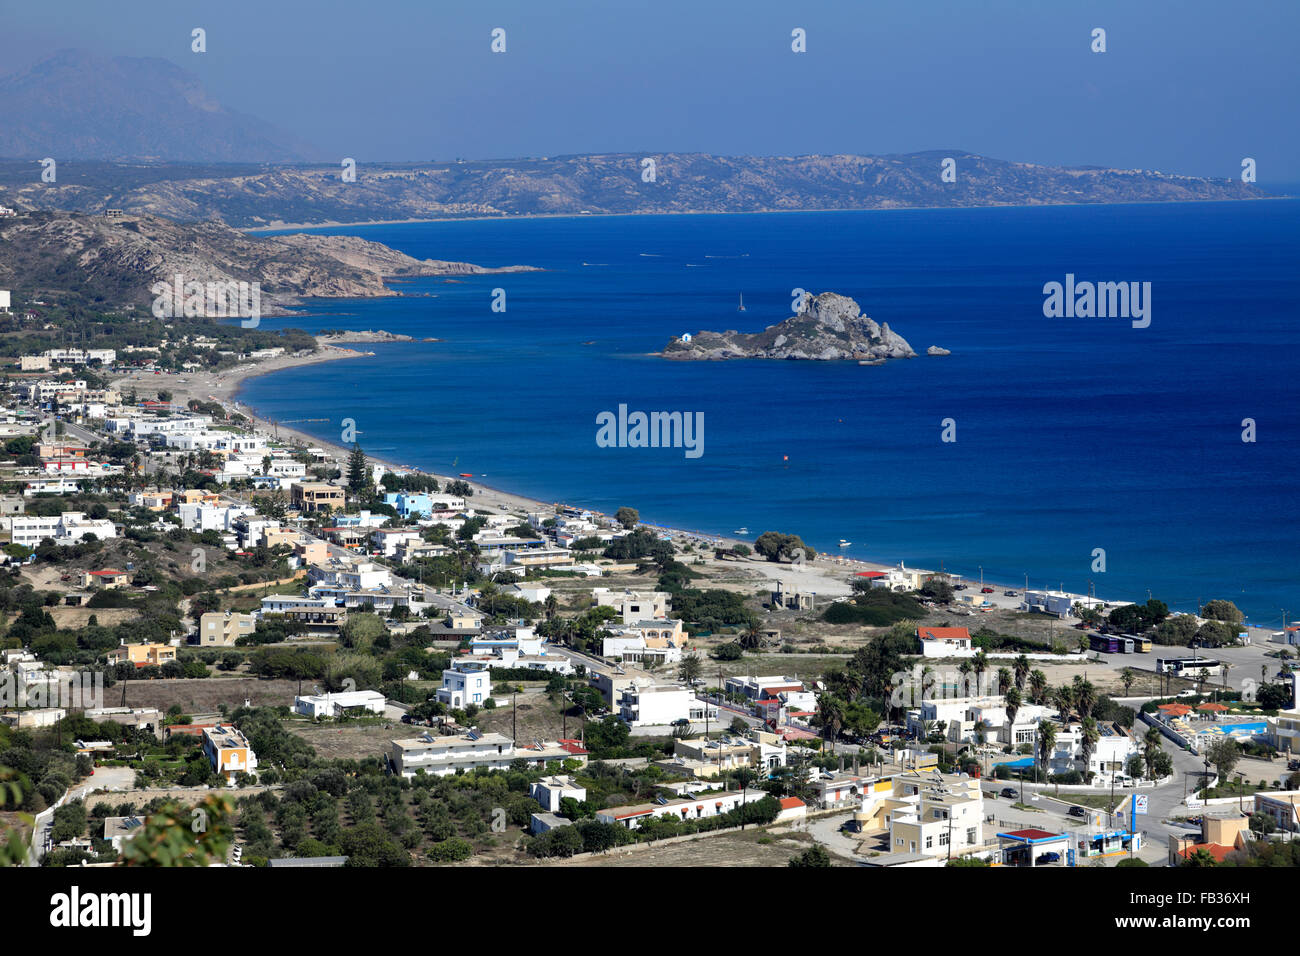 Panoramic view over Kefalos Bay, Kefalos town, Kos Island, Dodecanese group of islands, South Aegean Sea, Greece. Stock Photo